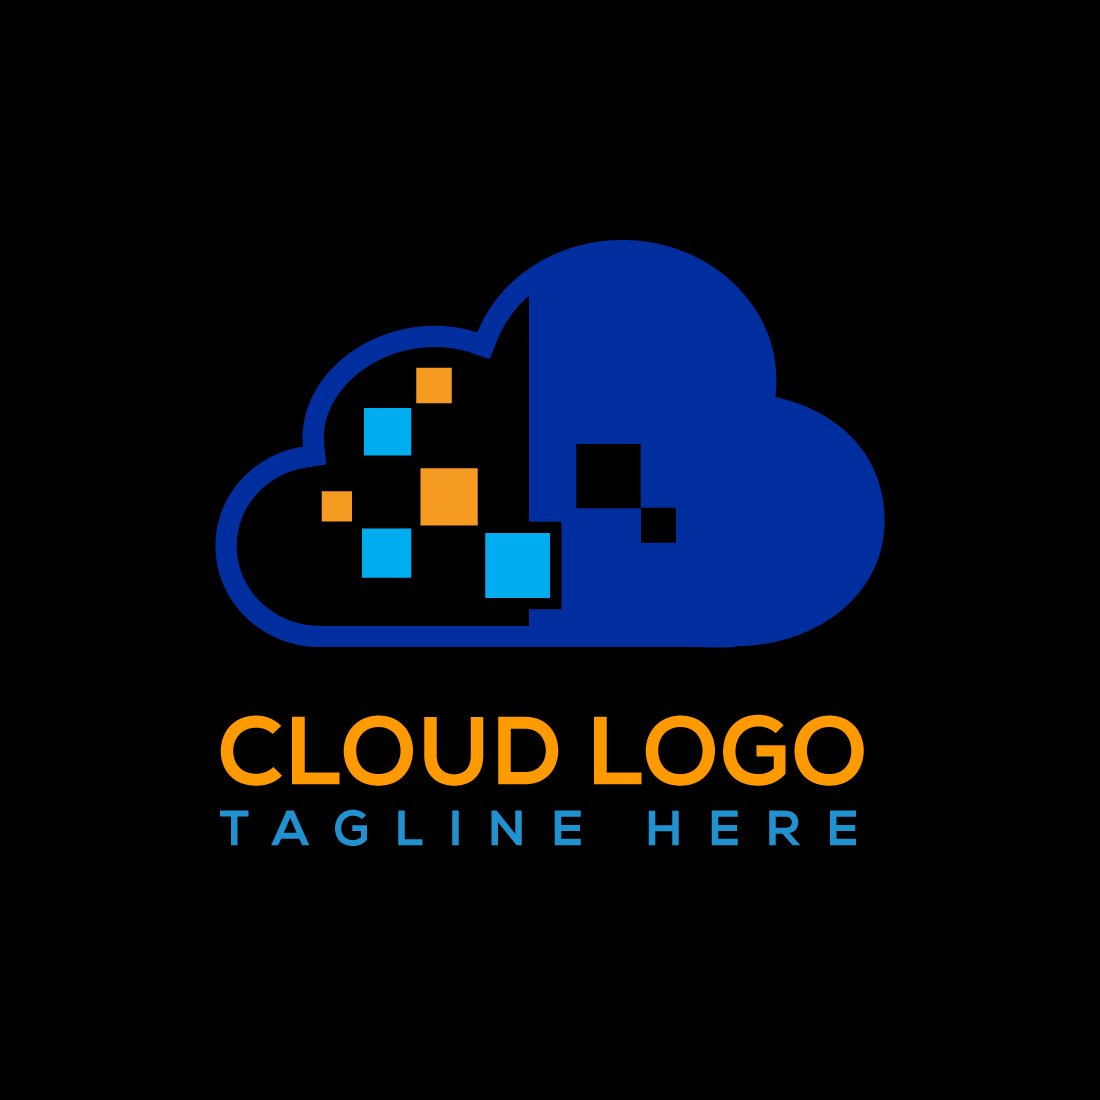 Provider Colorful Cloud Logo Design Black Background cover image.